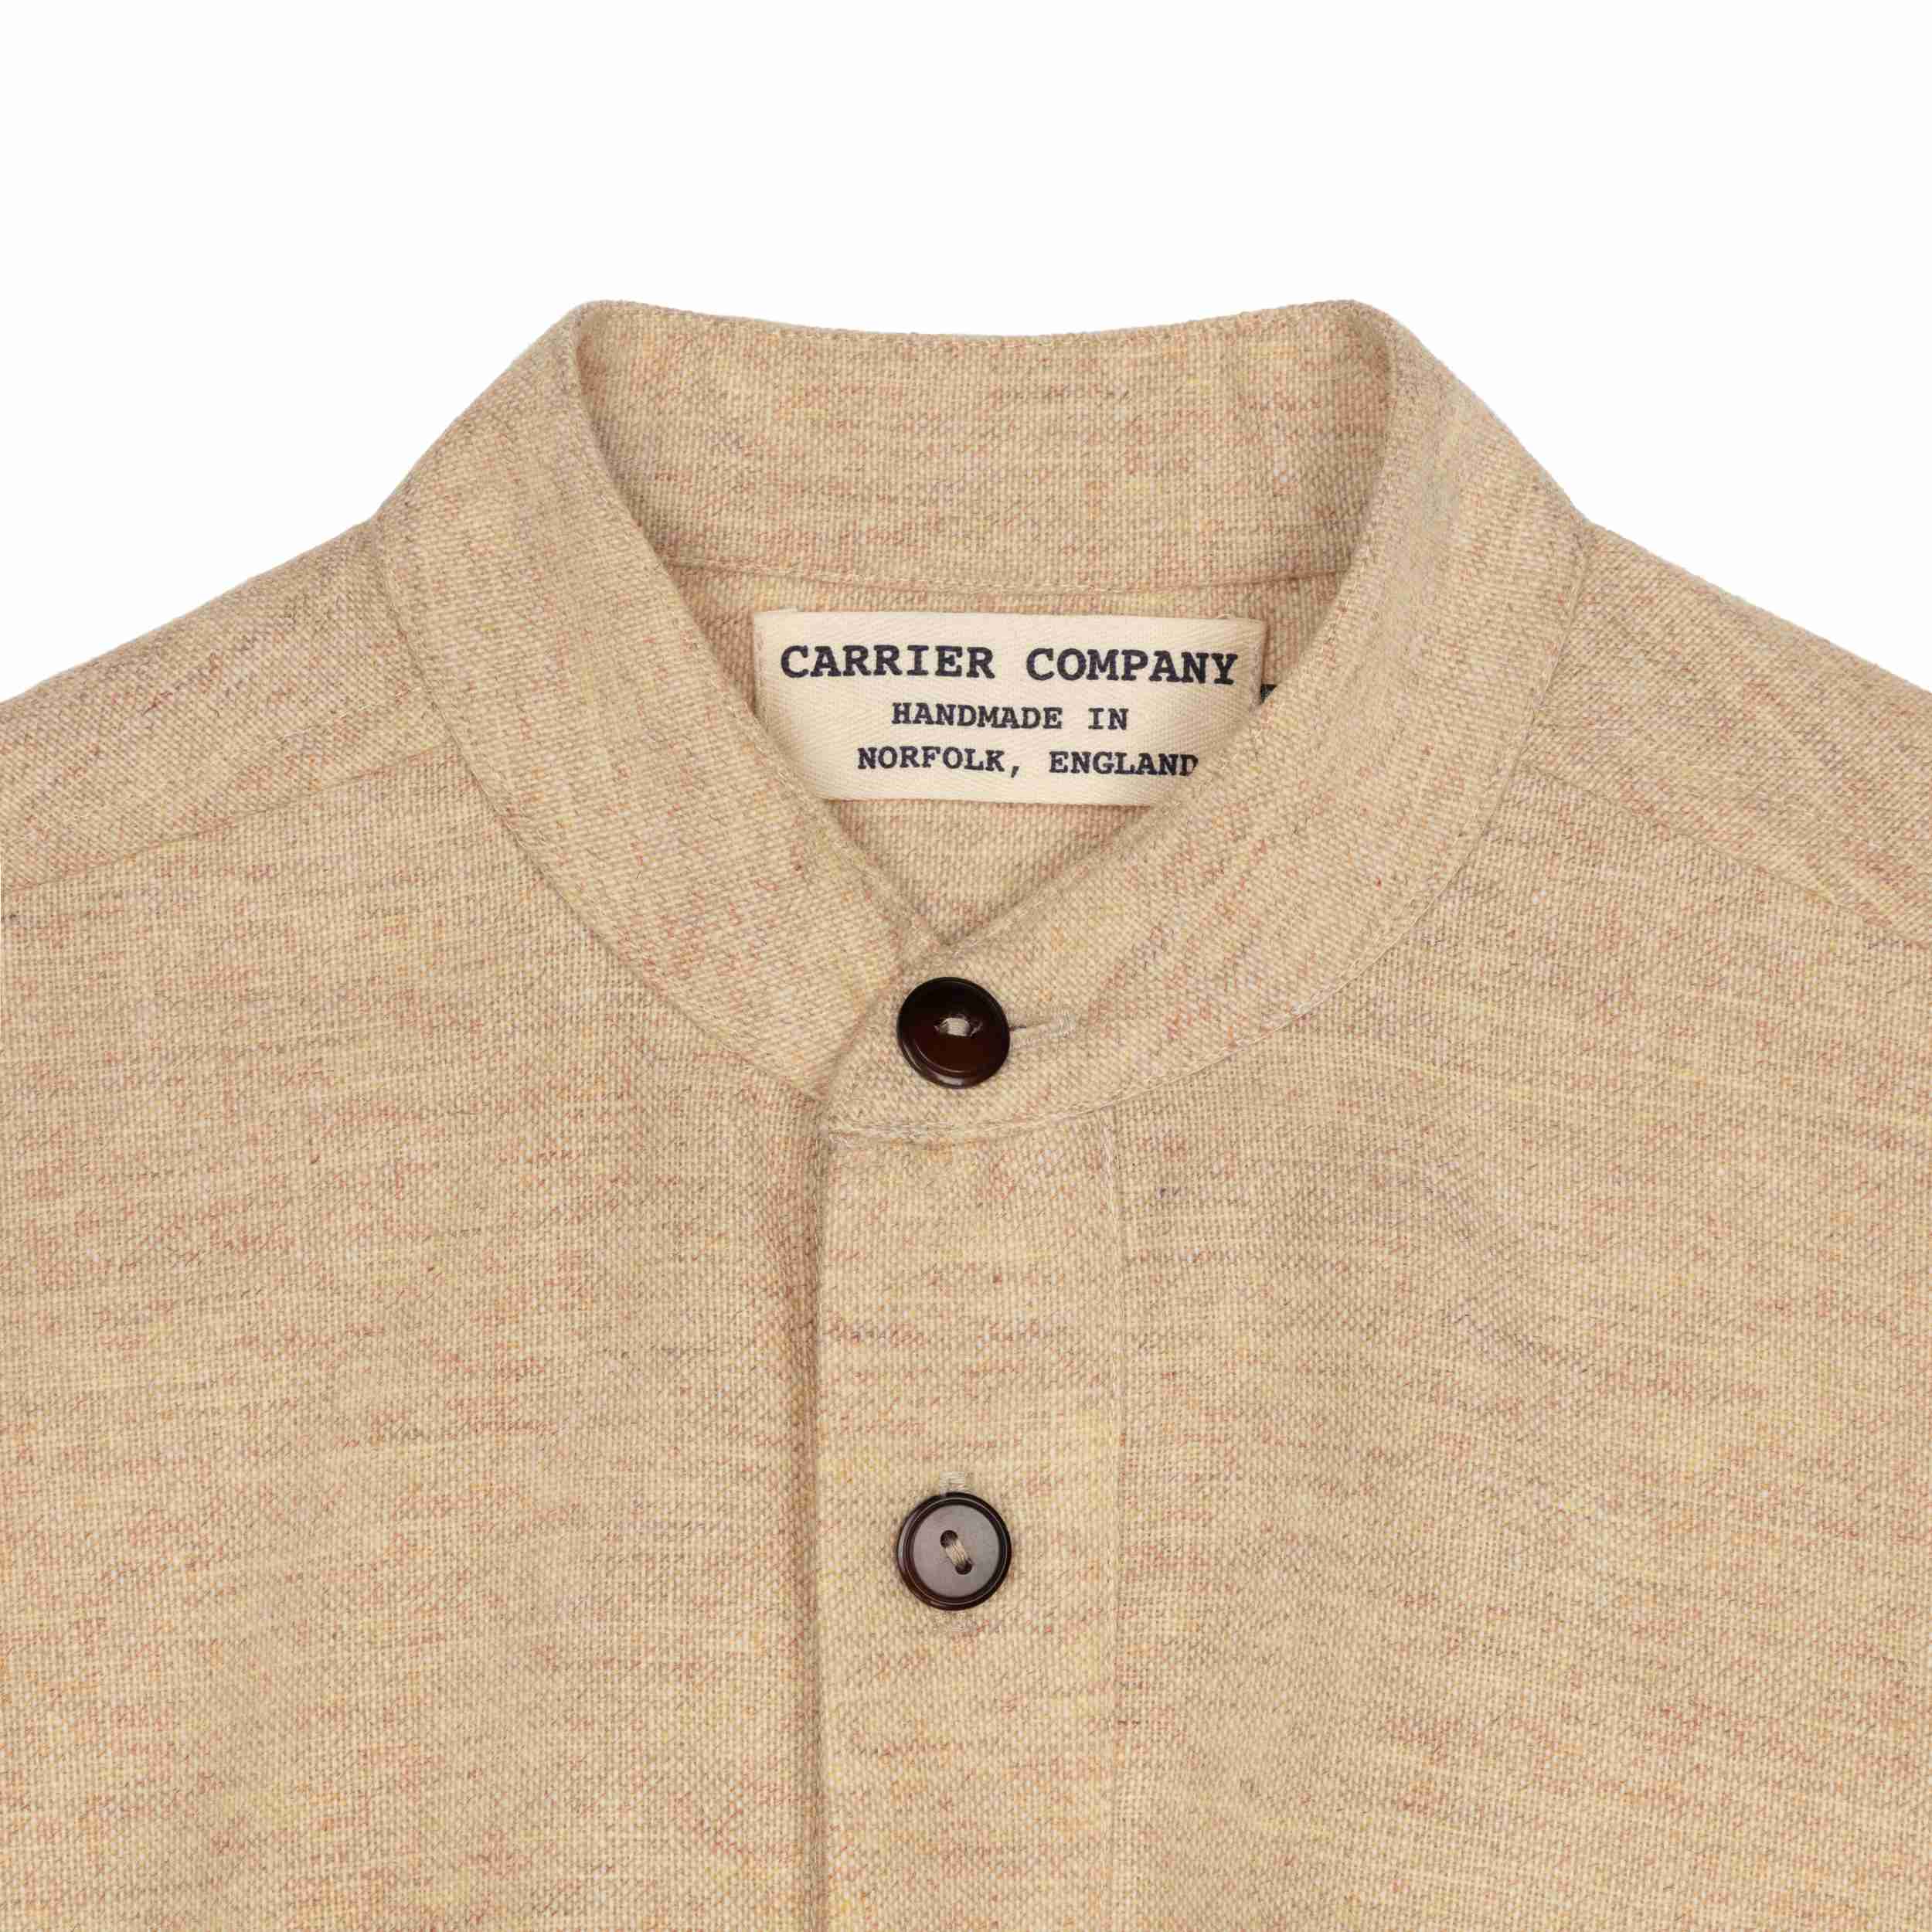 Carrier Company Wool Overshirt in BarleyStraw